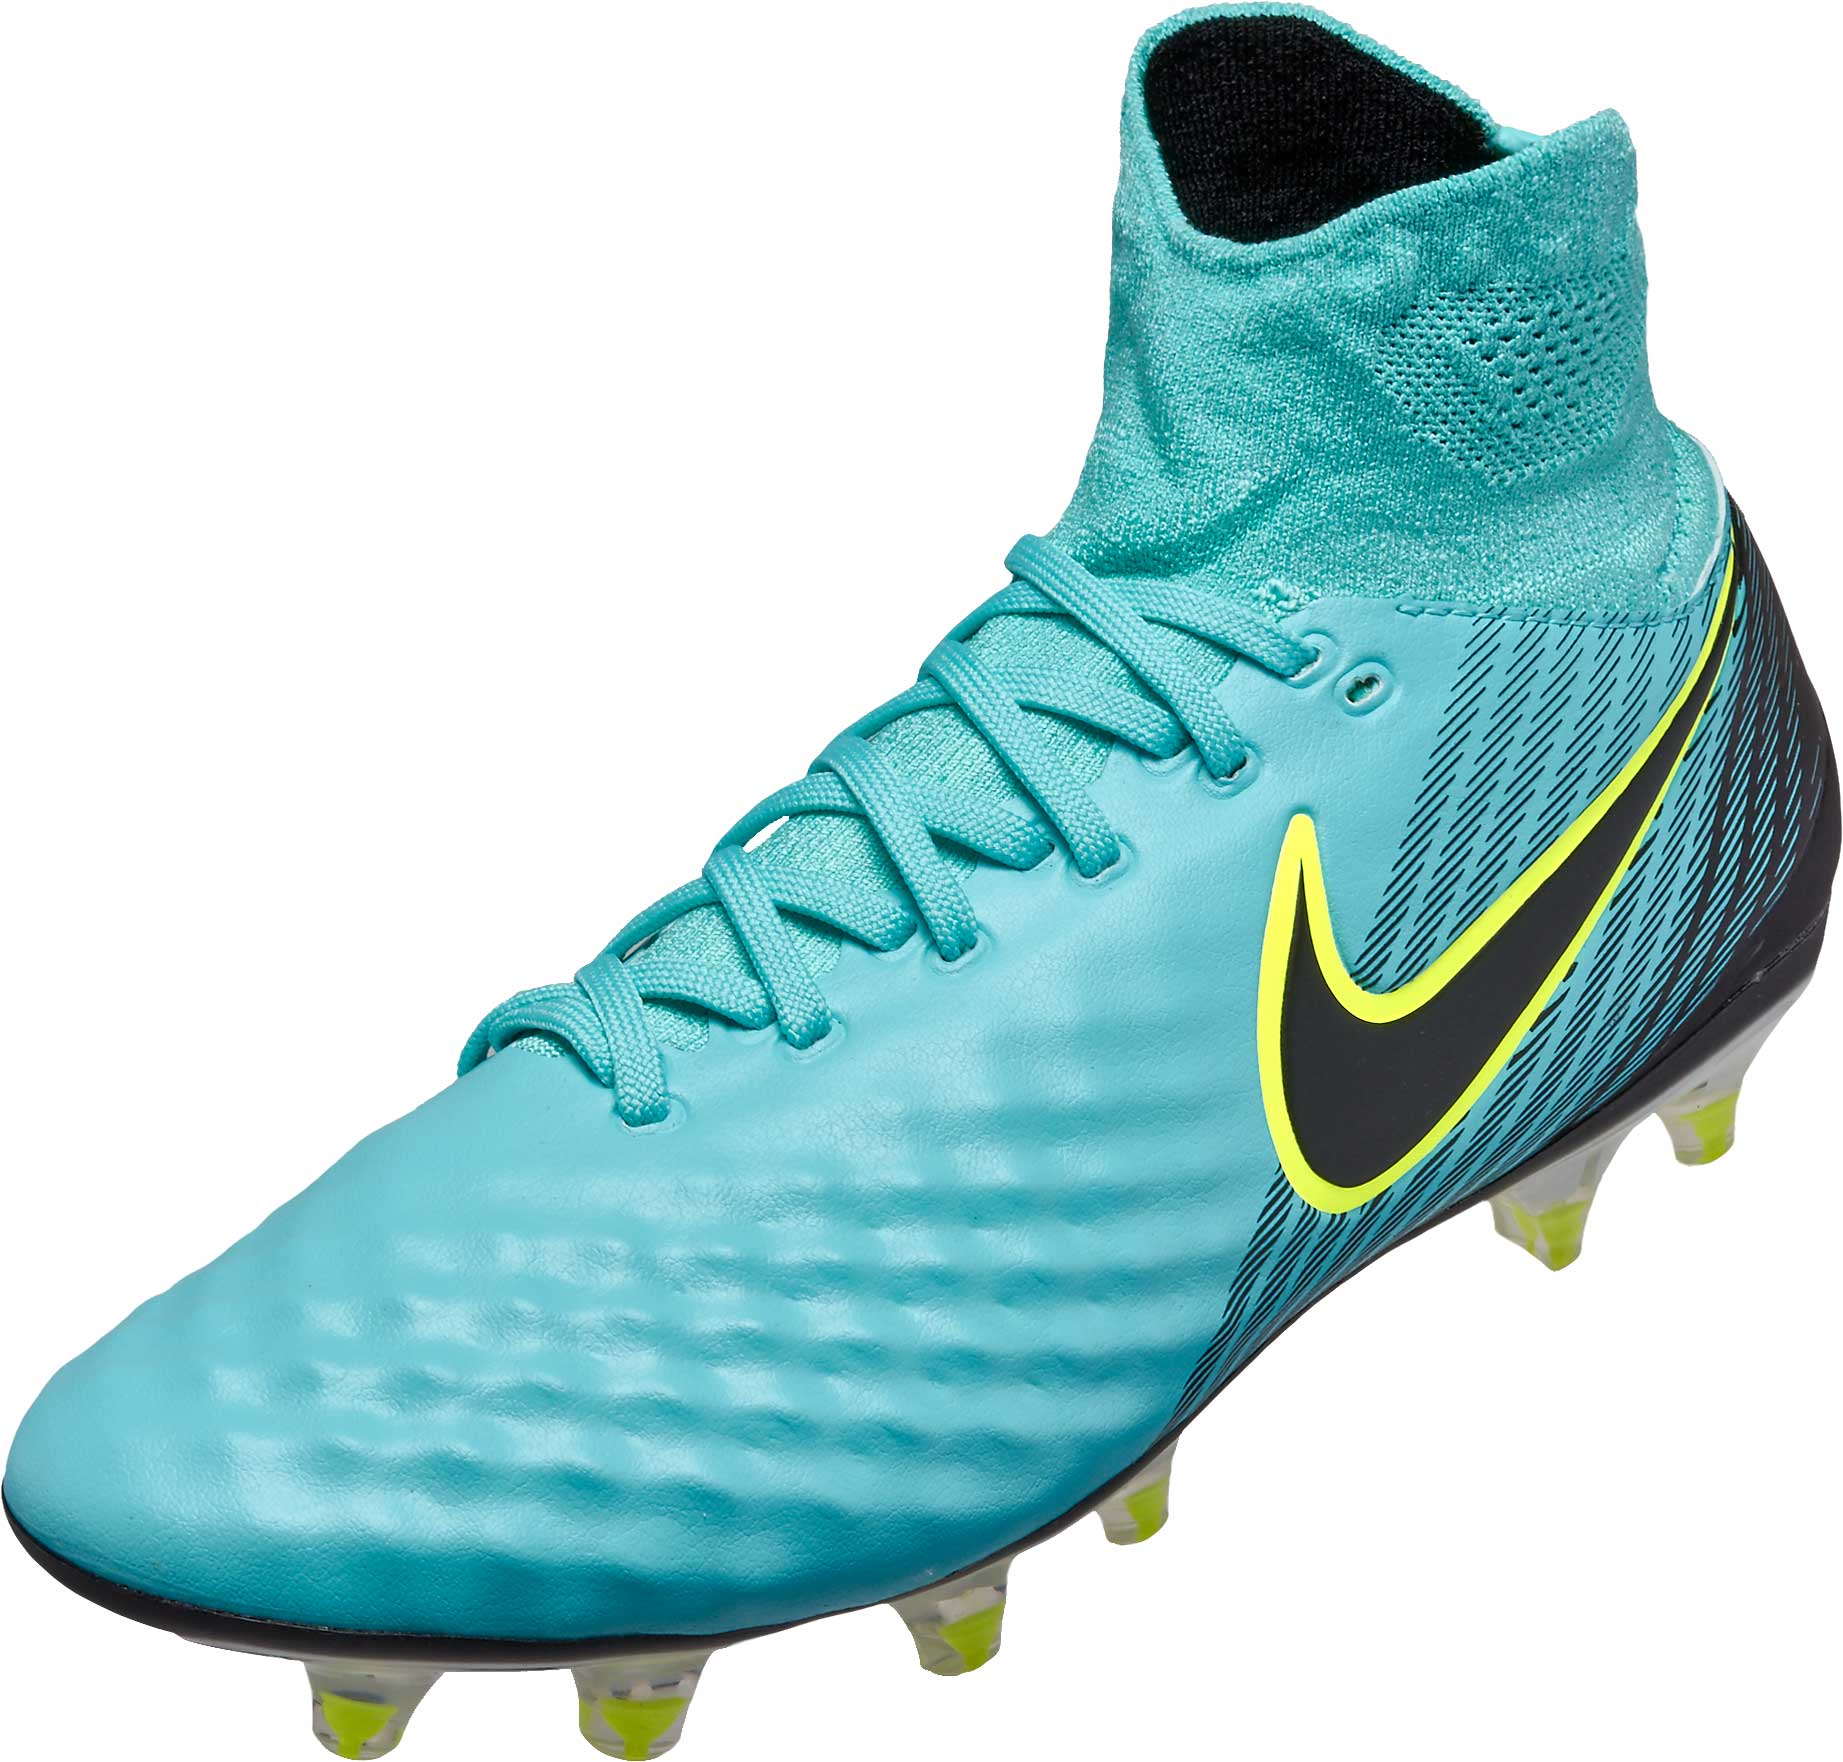 SR4U Reflective Neon Yellow Soccer Laces on Nike Magista